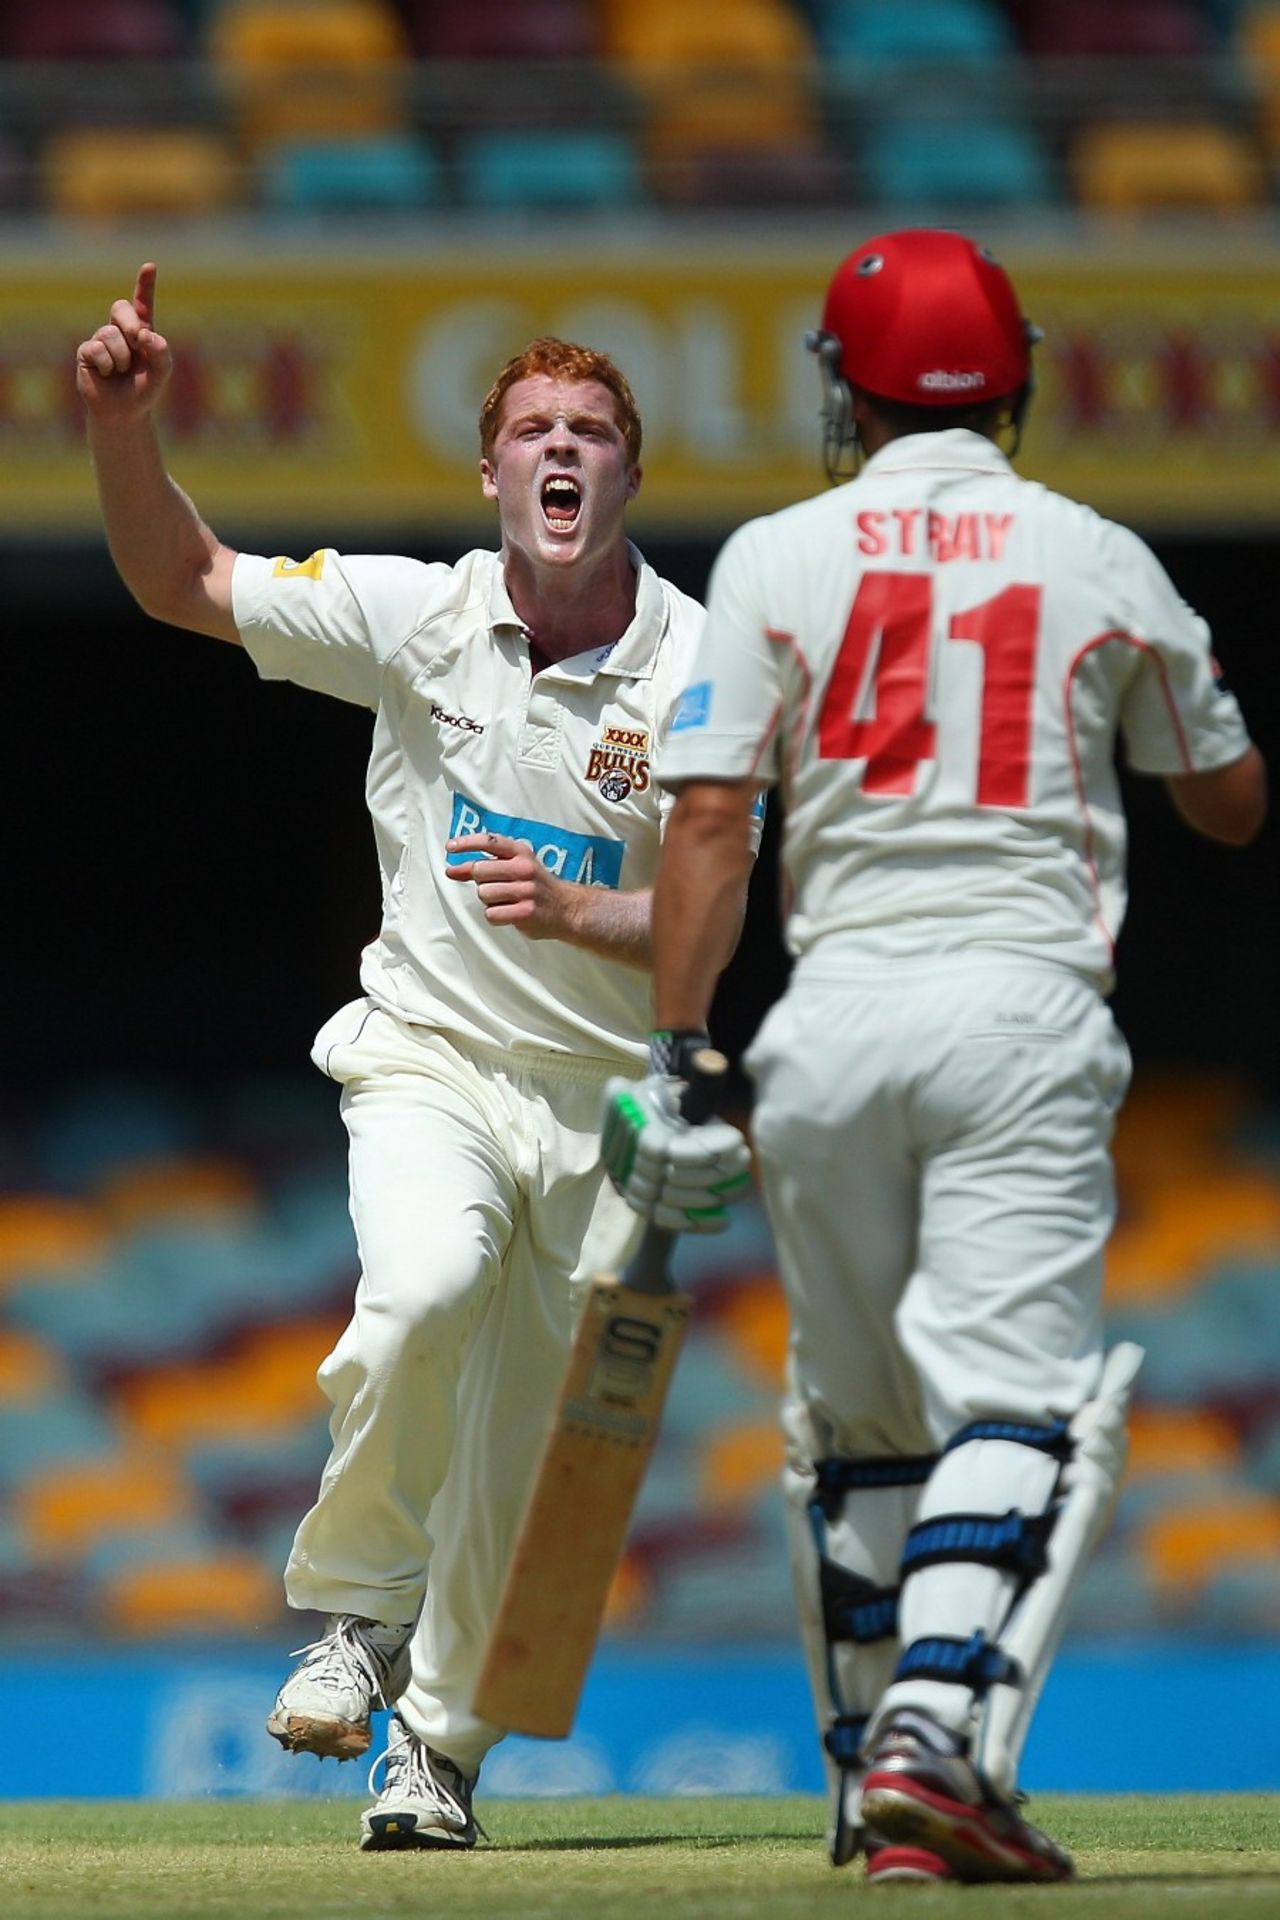 Alister McDermott celebrates a wicket, Queensland v South Australia, Sheffield Shield, Brisbane, 1st day, March 8, 2012